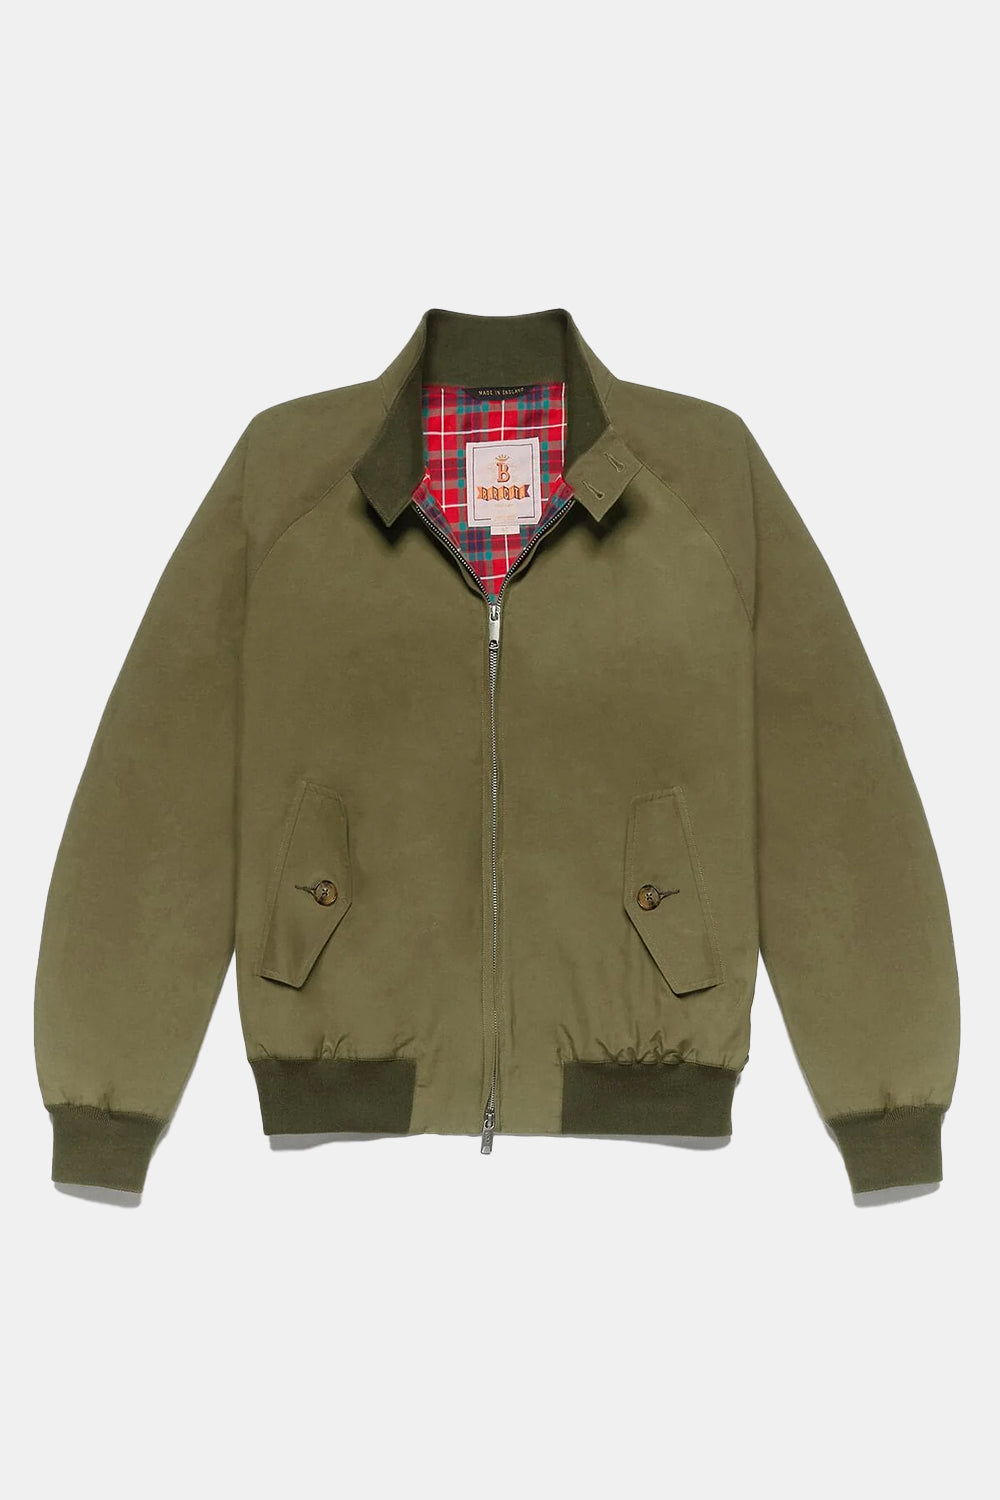 Baracuta G9 Classic Cotton-Blend Harrington Jacket (Army Green)